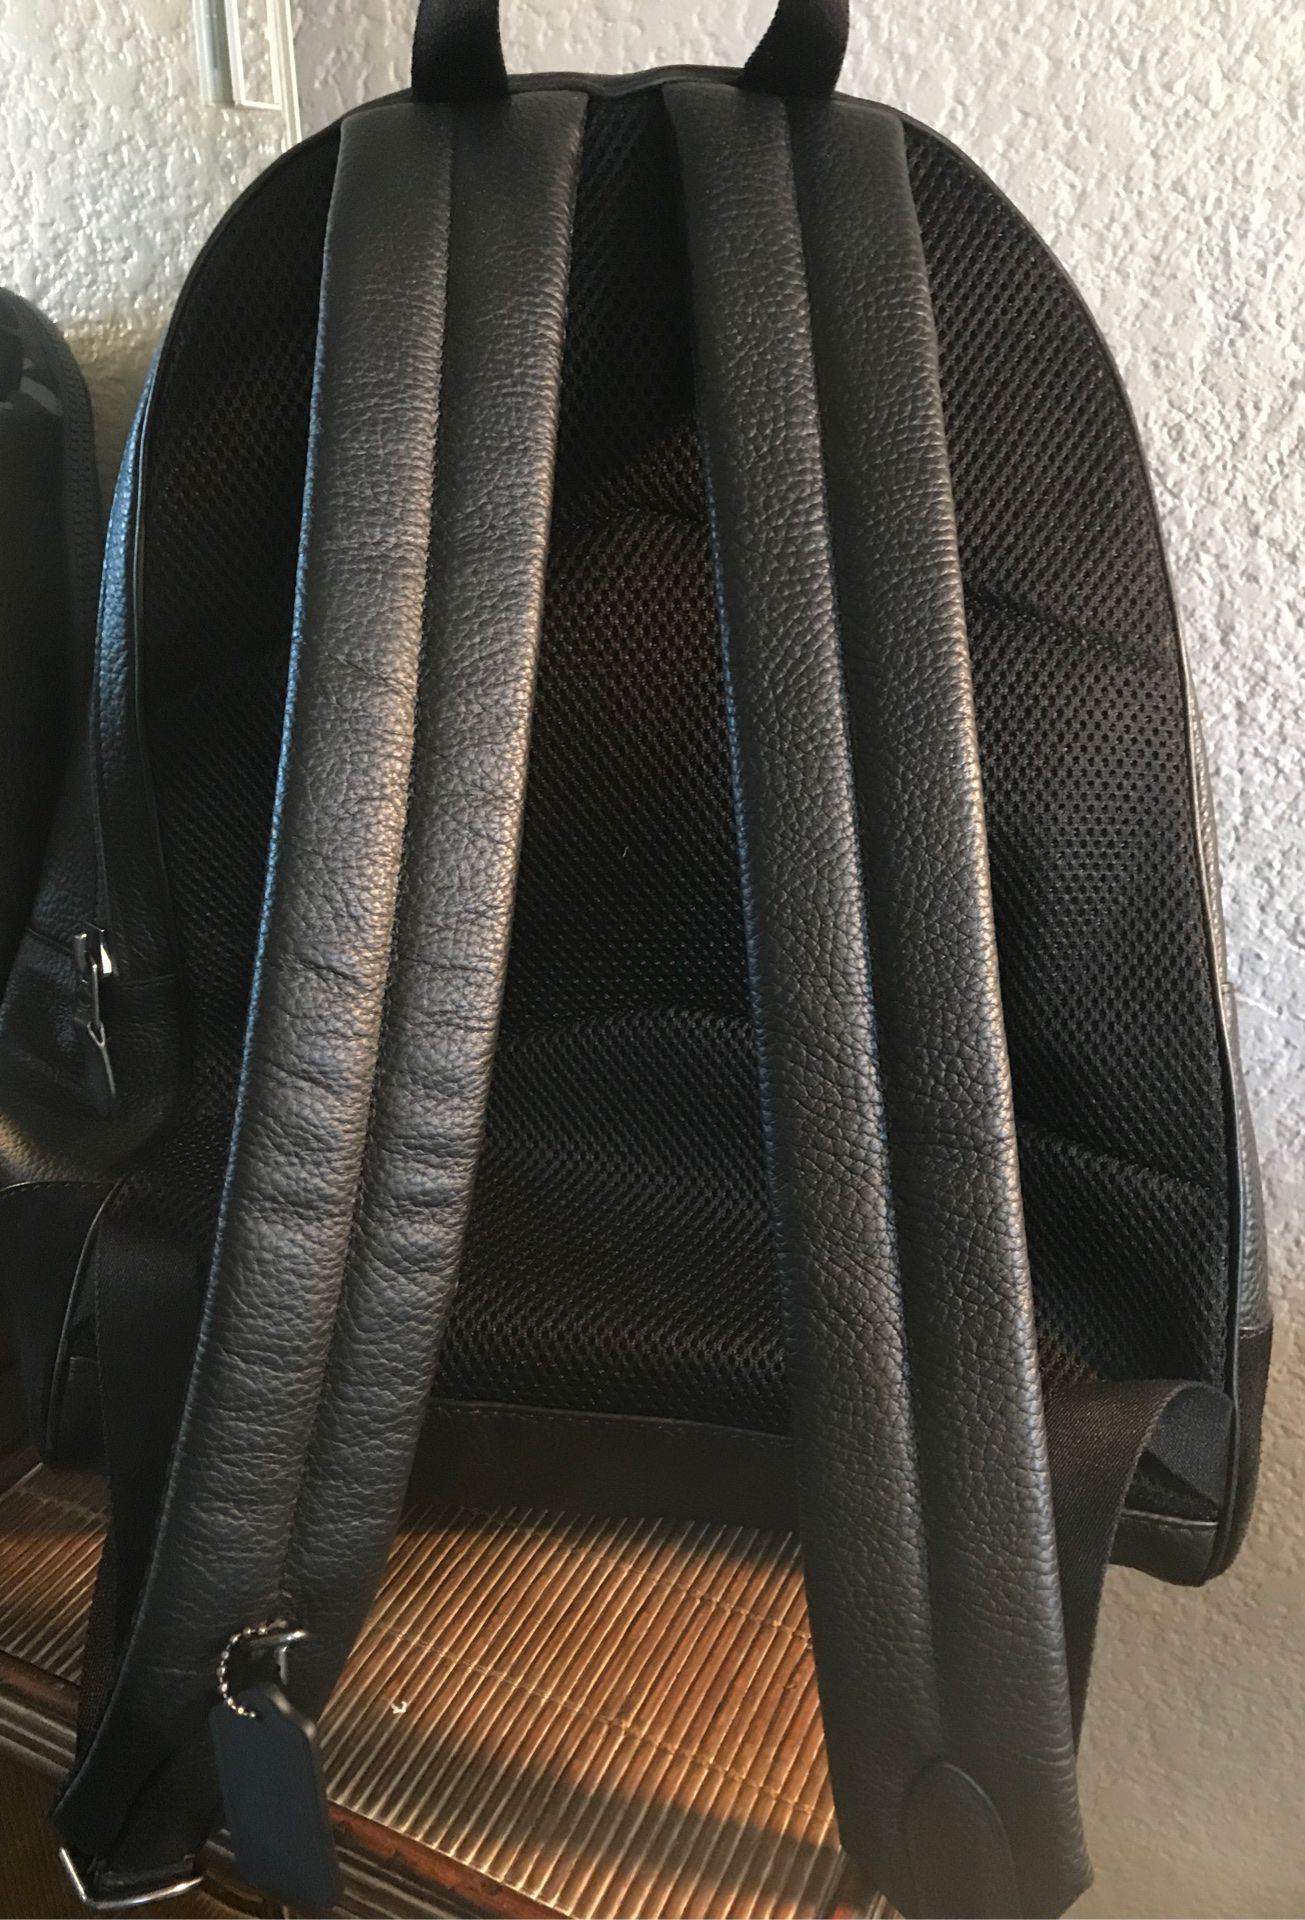 Designer coach backpack (brand new) for Sale in Henderson, NV - OfferUp